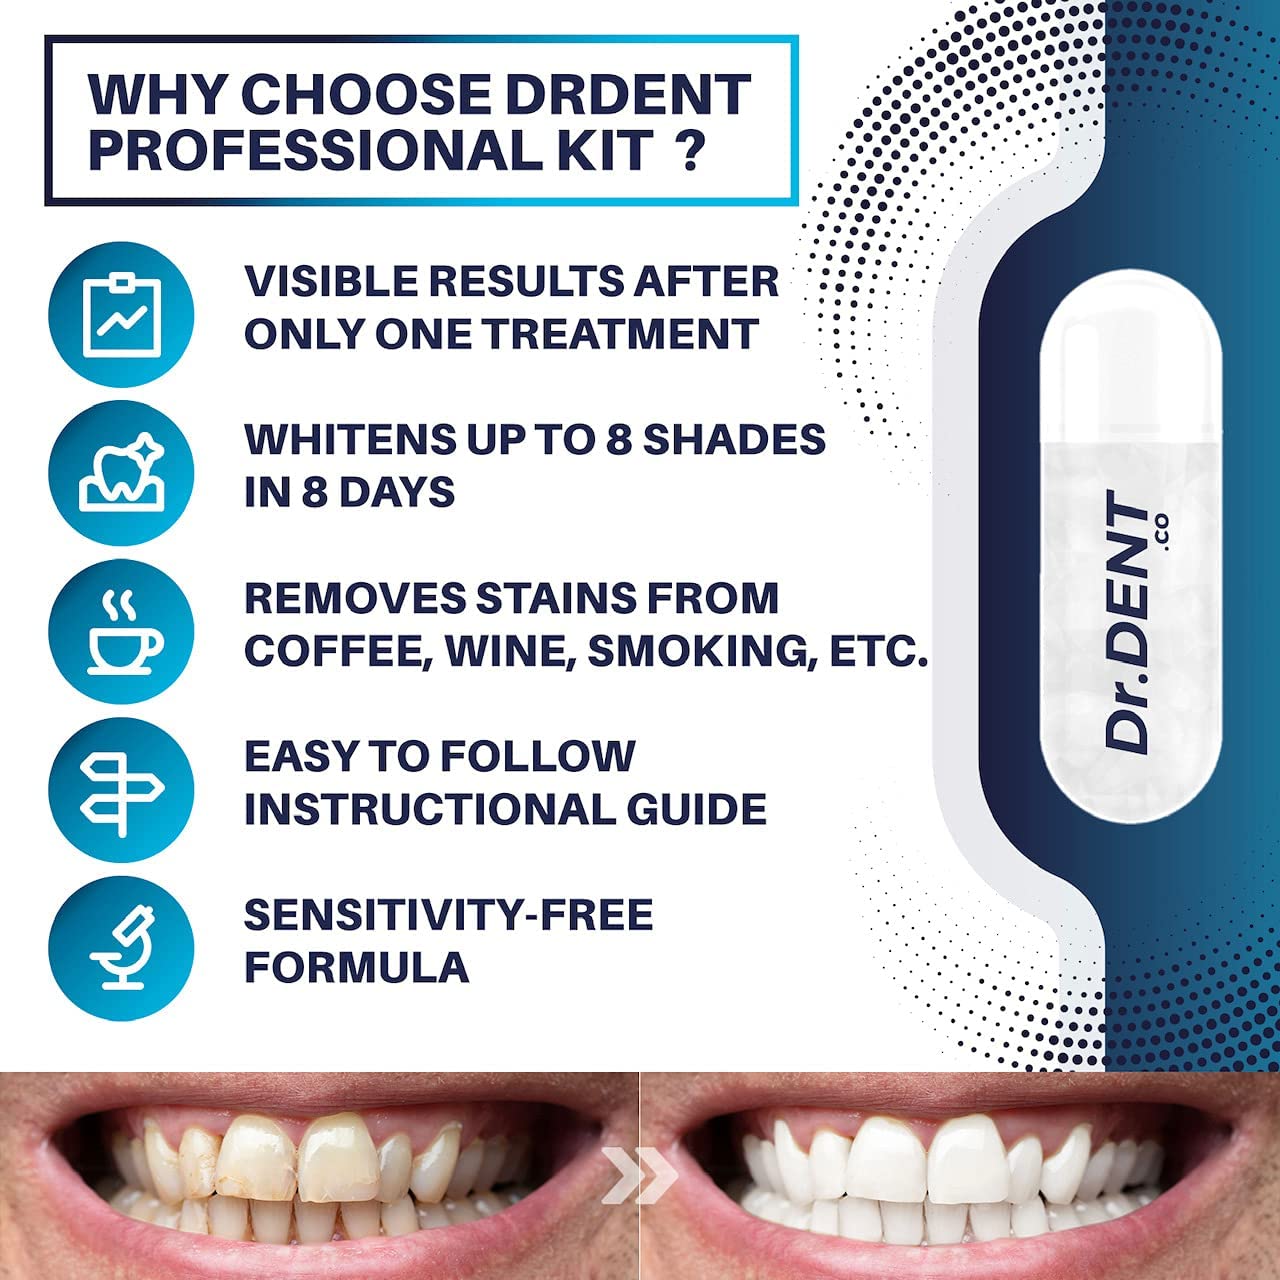 DrDent Professional LED Teeth Whitening Kit